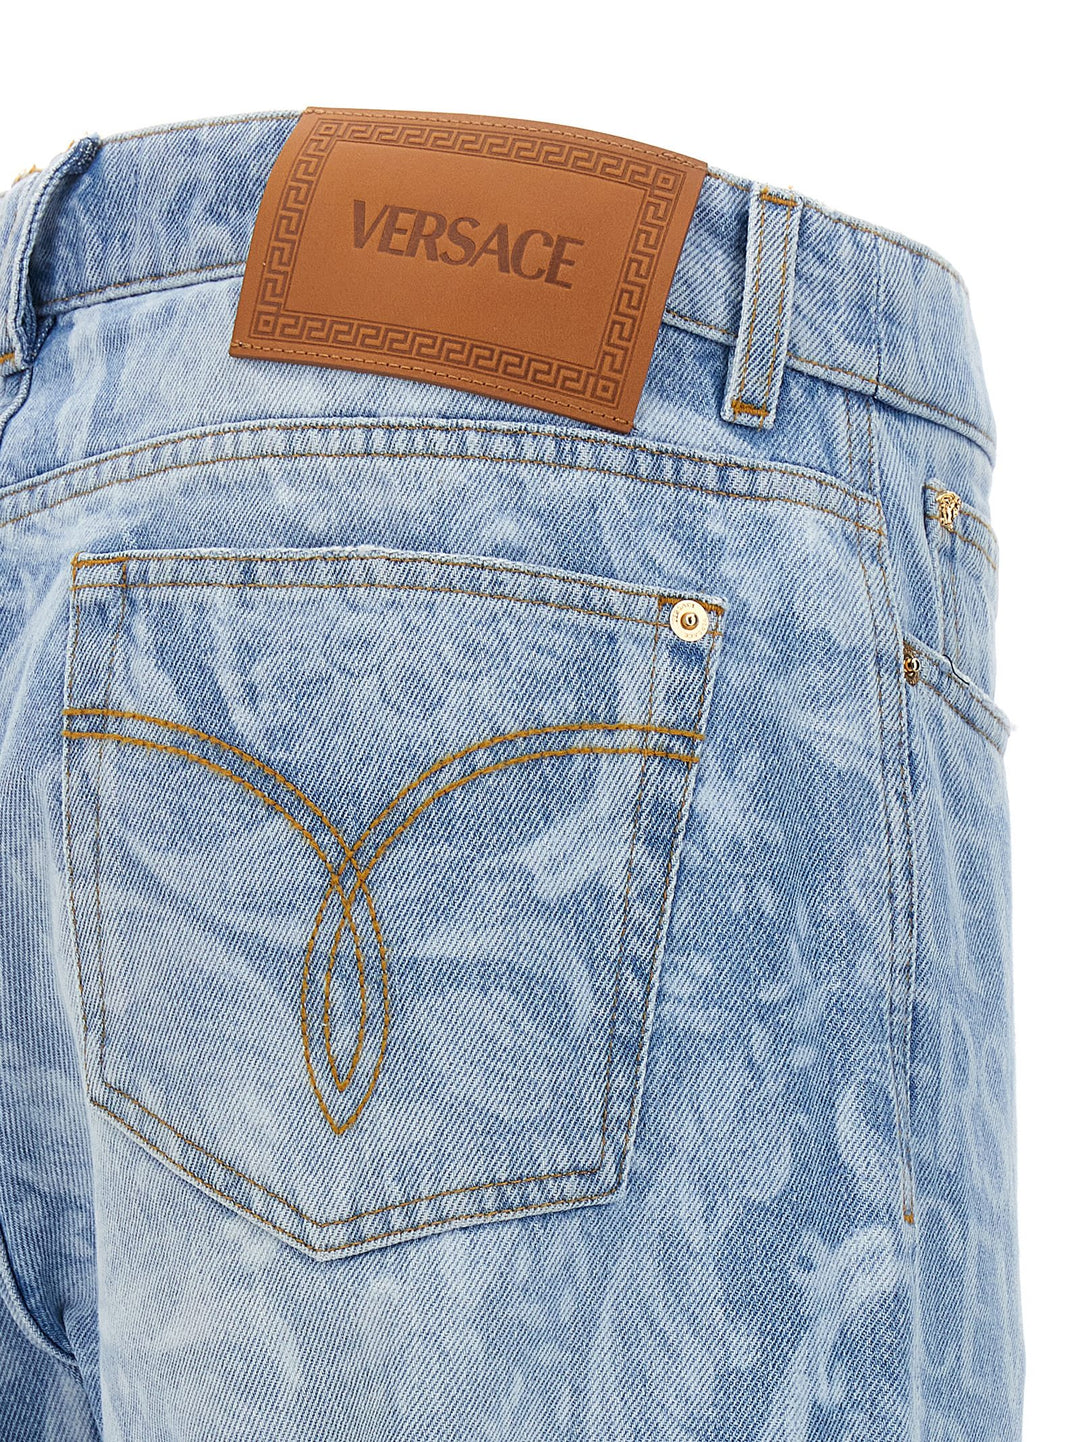 Versace Allover Jeans Celeste